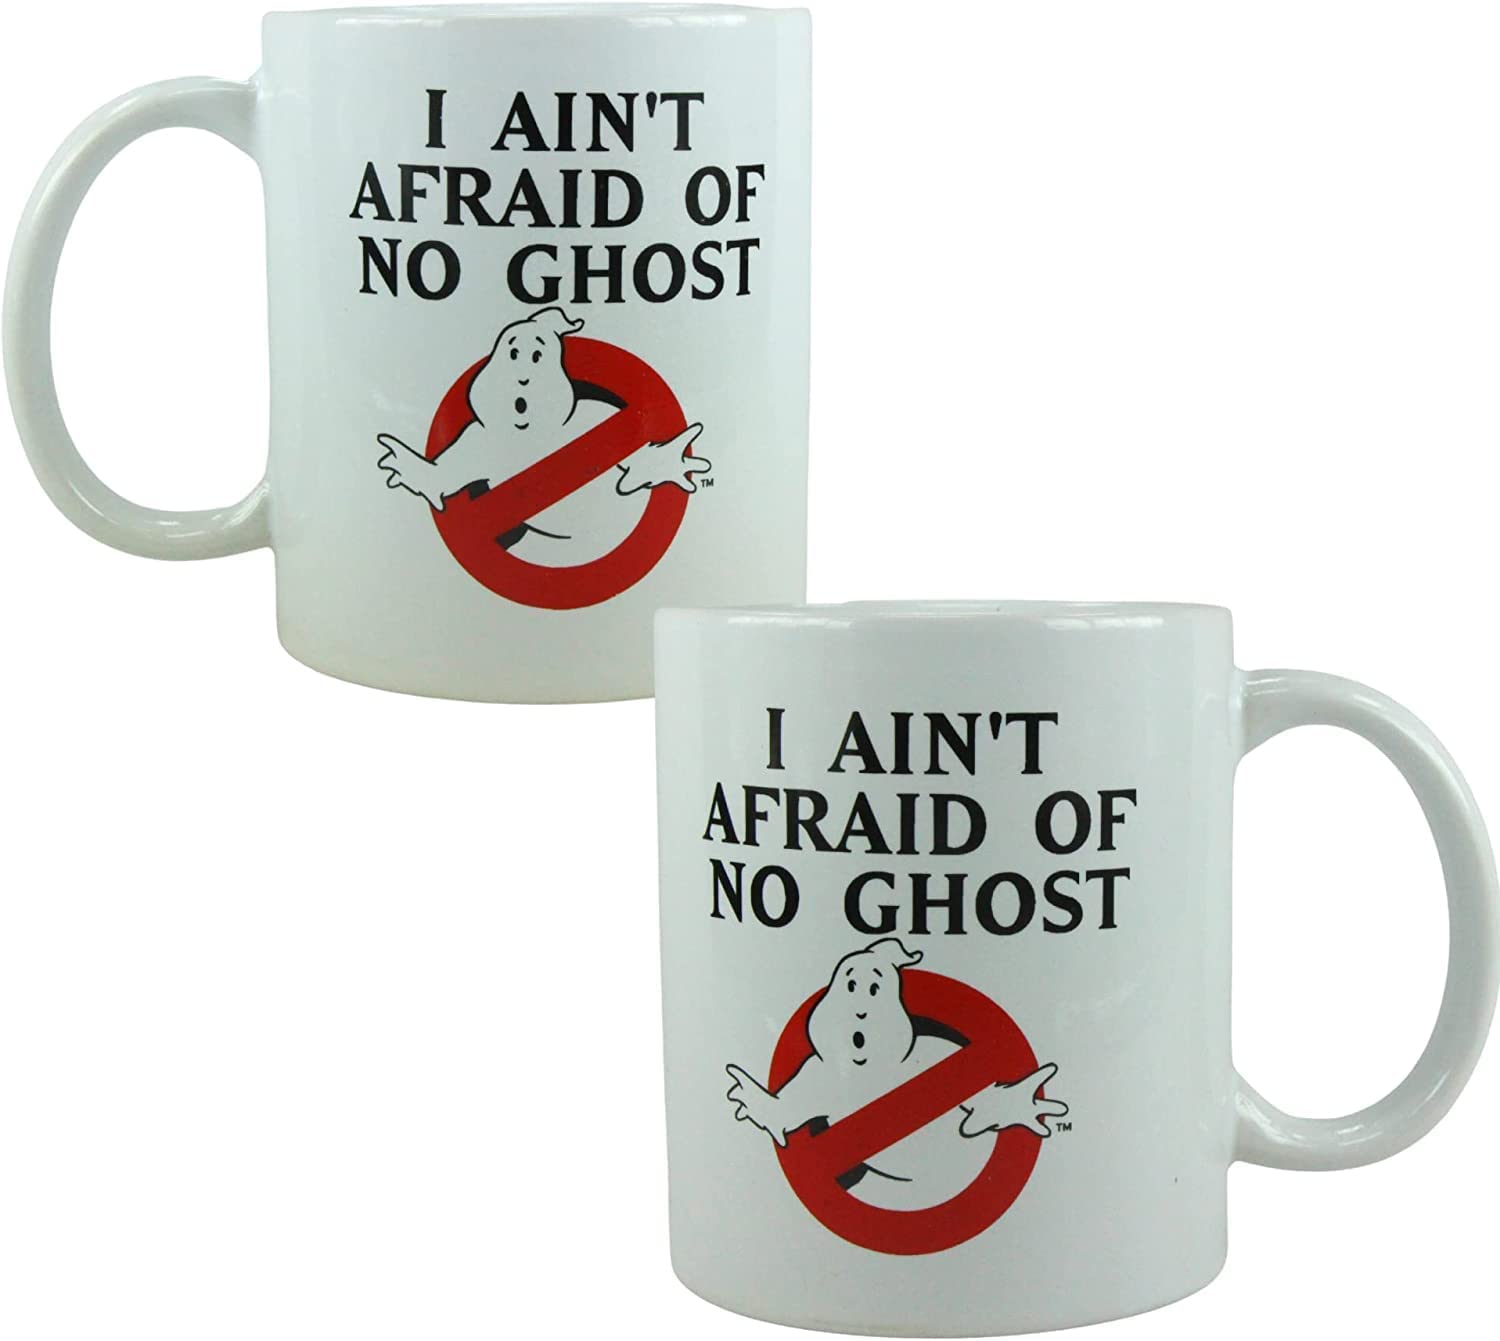 Ghostbusters 330ml Ceramic Mug Twin Packs - I Ain't Afraid of No Ghost & Ghostbuster Logo Mug - Toptoys2u